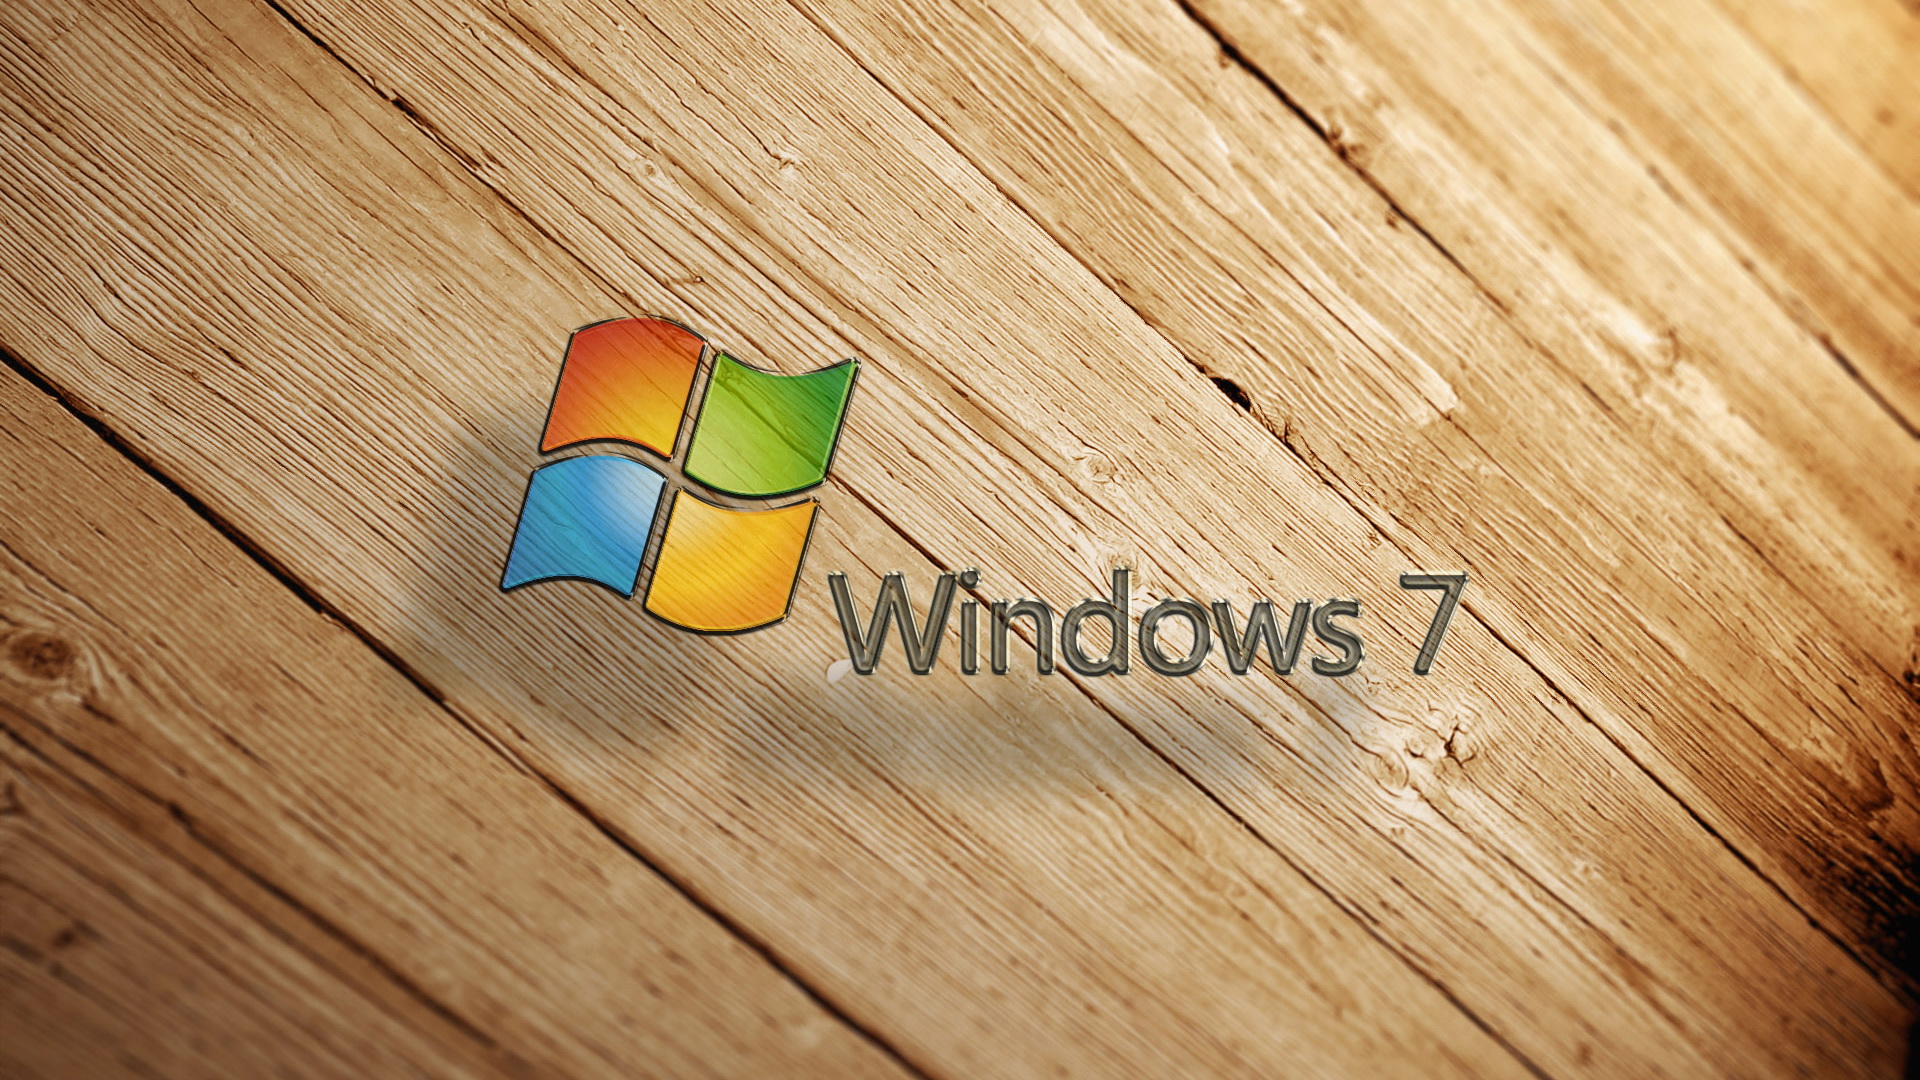 Windows 7 Best Wallpaper Download cool HD wallpapers here